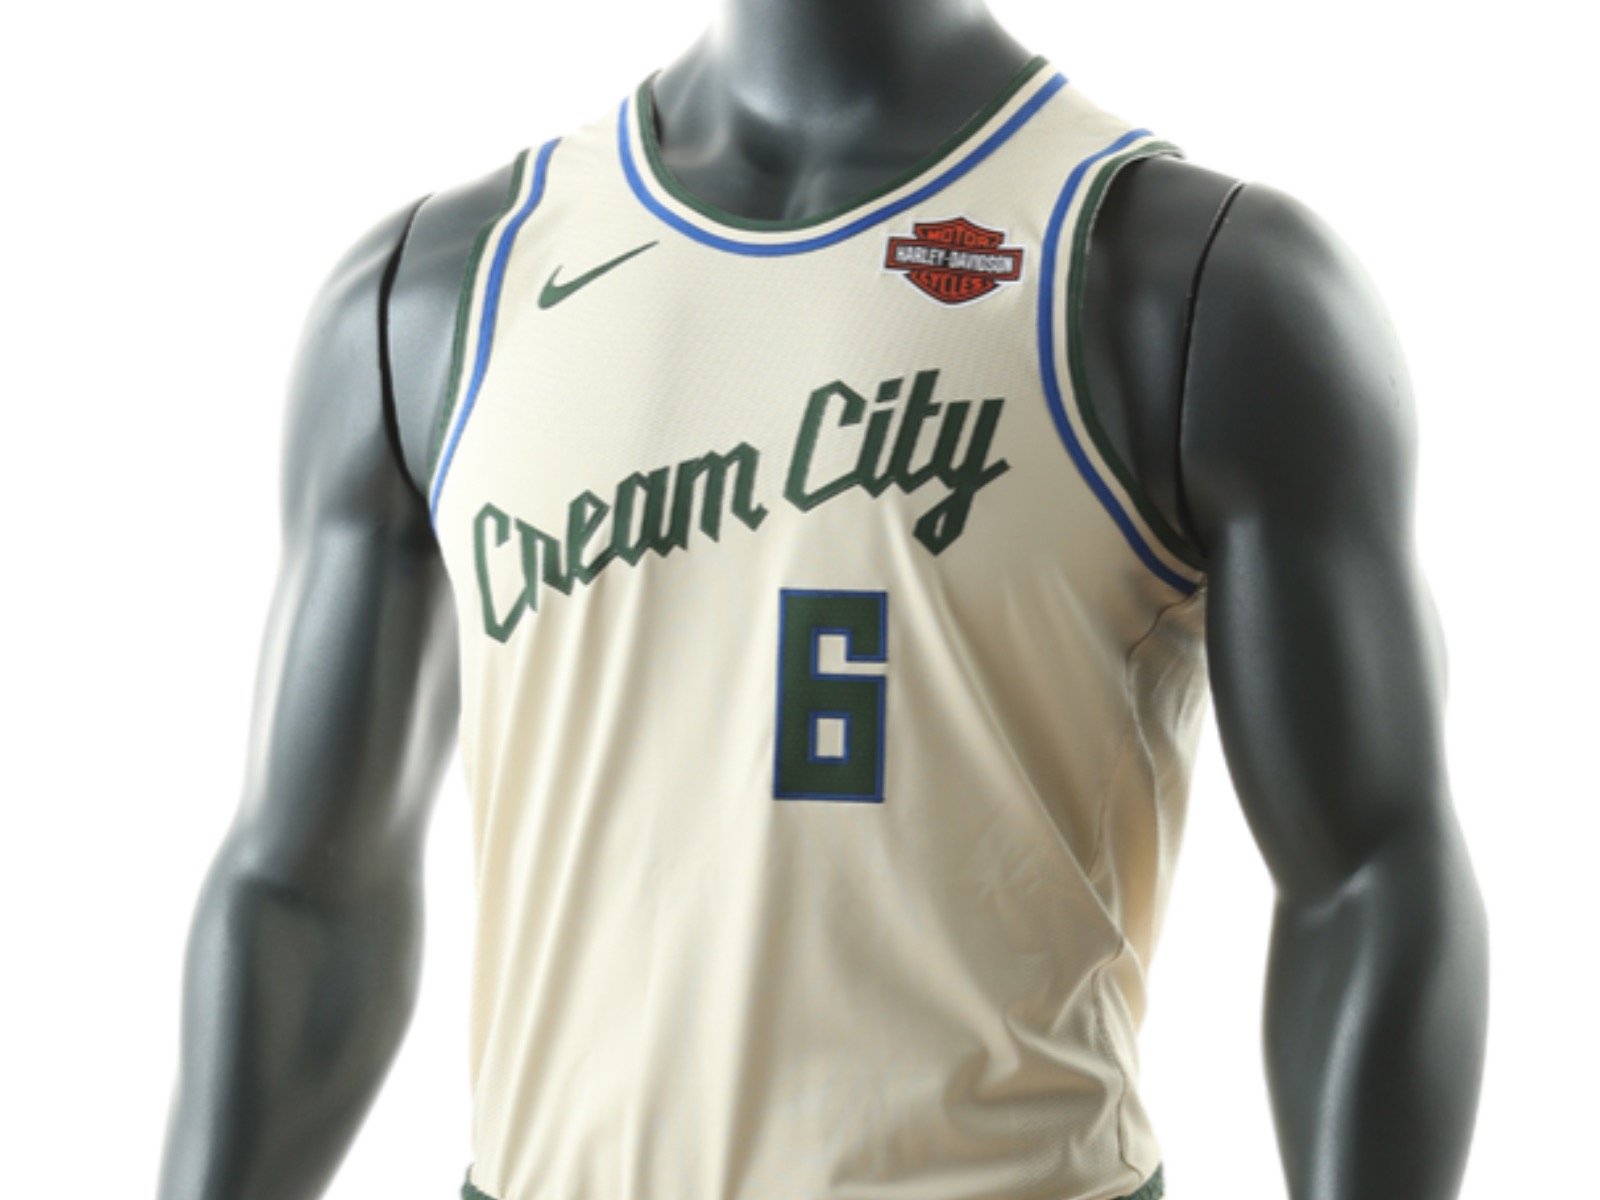 alternate Cream City jersey